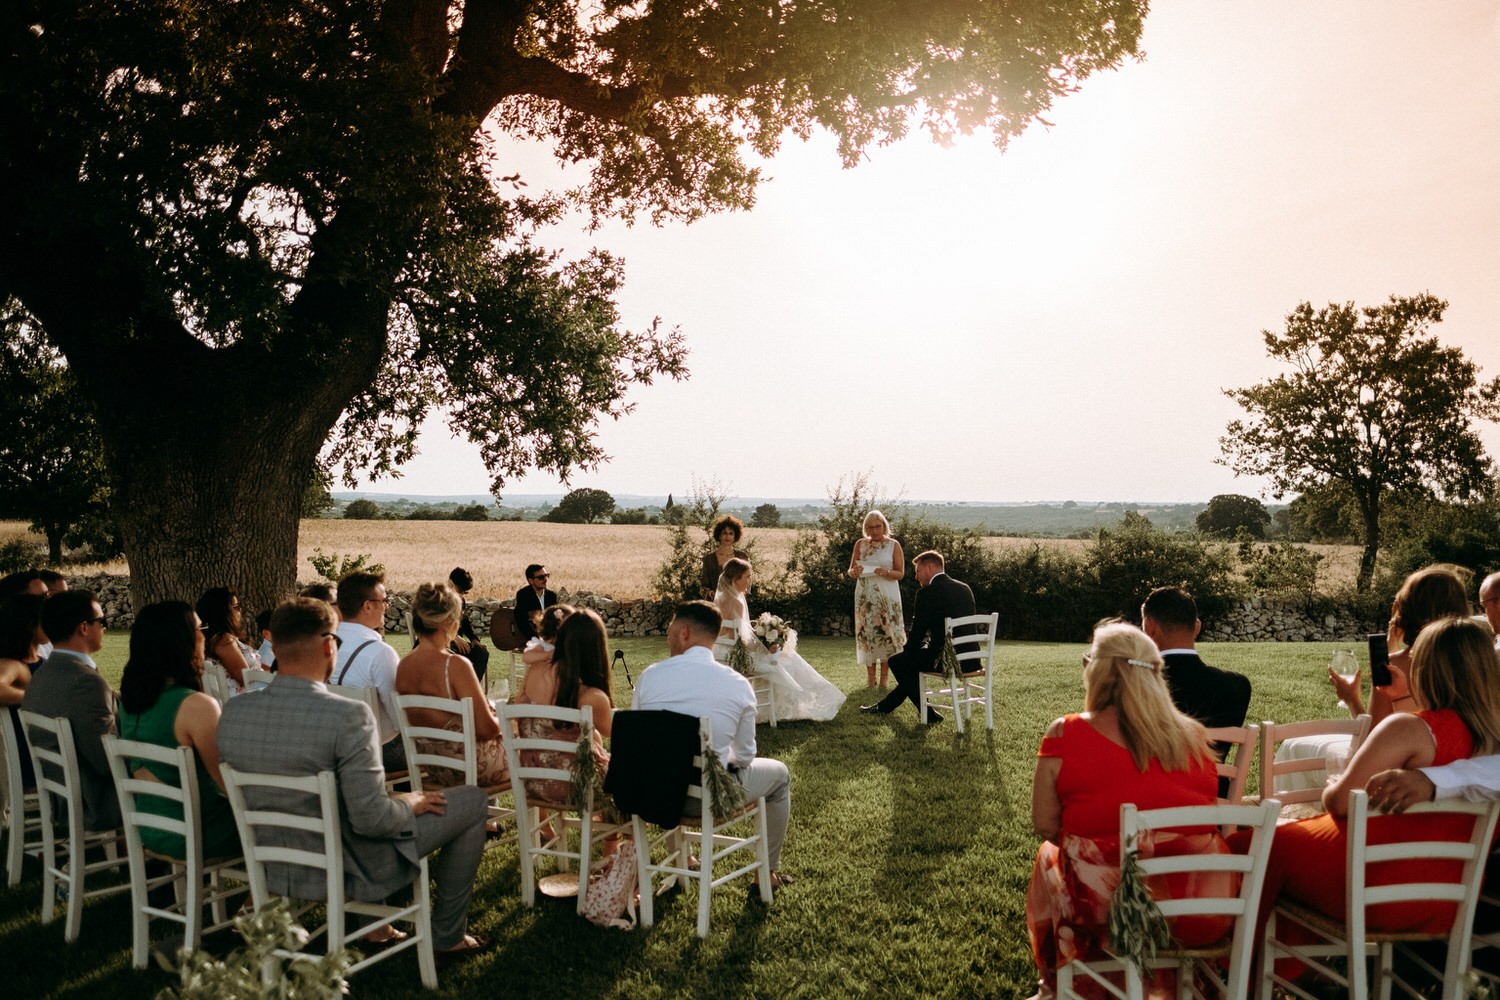 Ceremony - Wedding in Apulia, Italy - 35mm